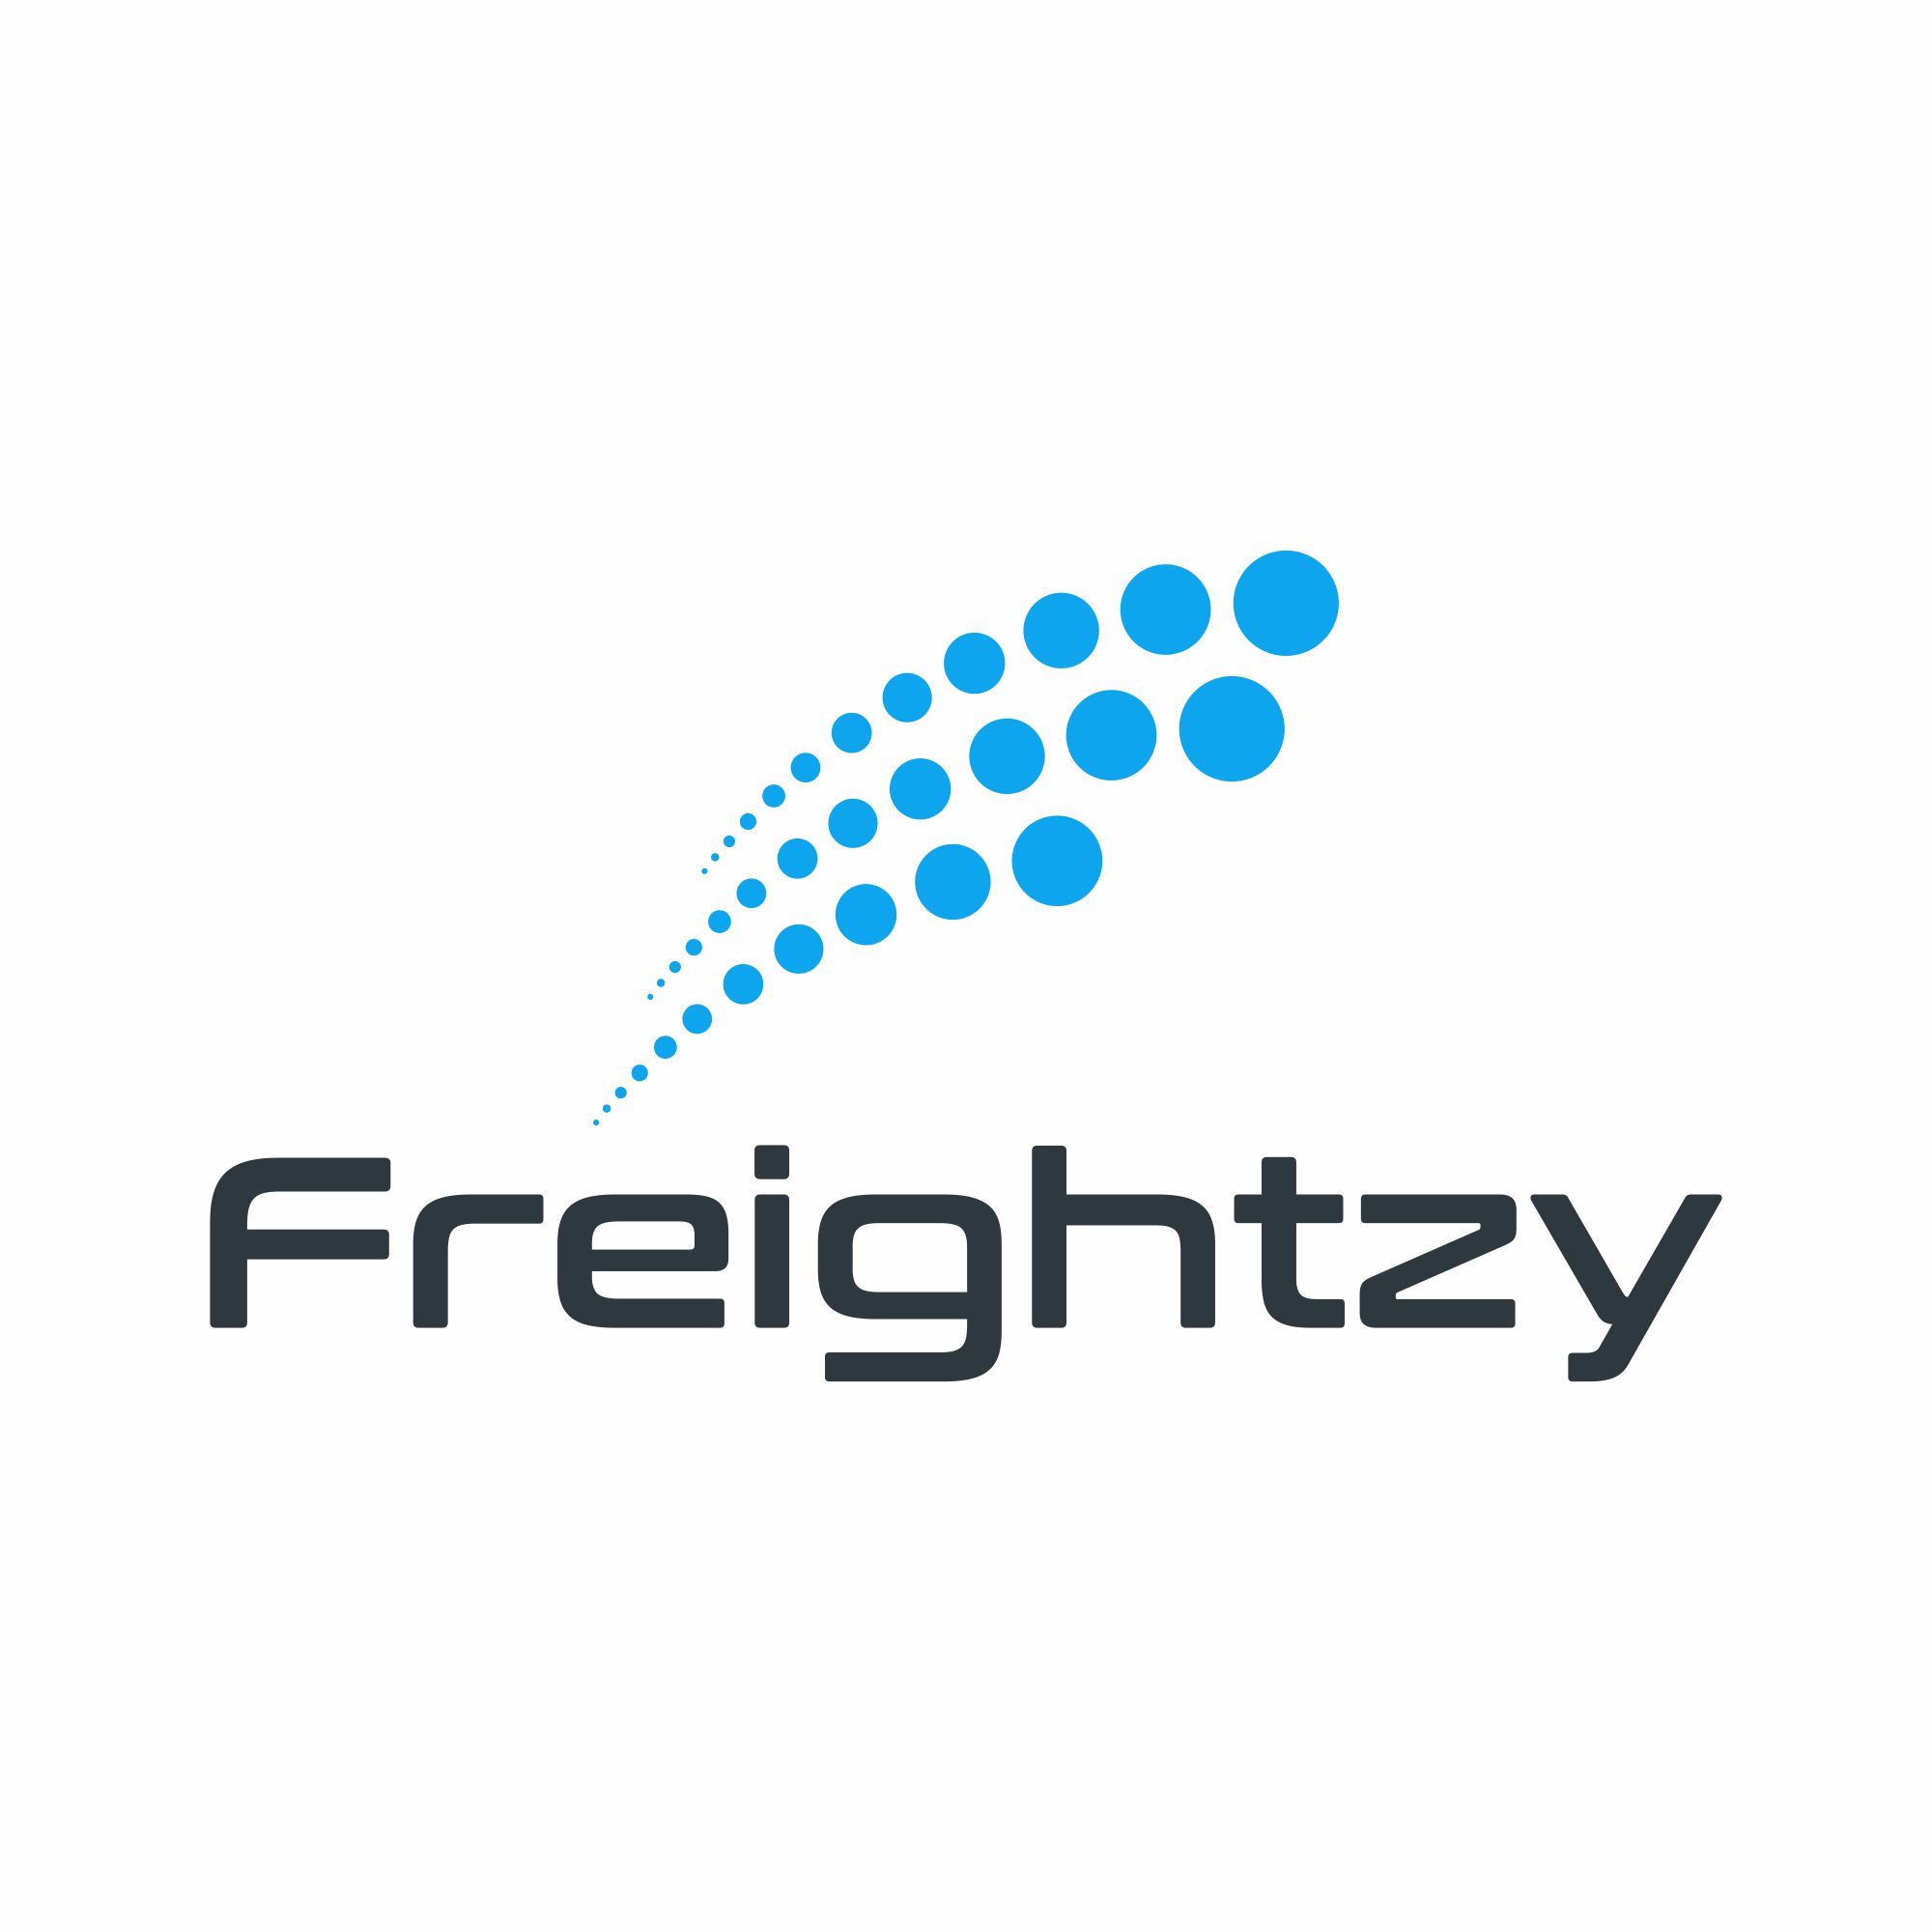 Freightzy